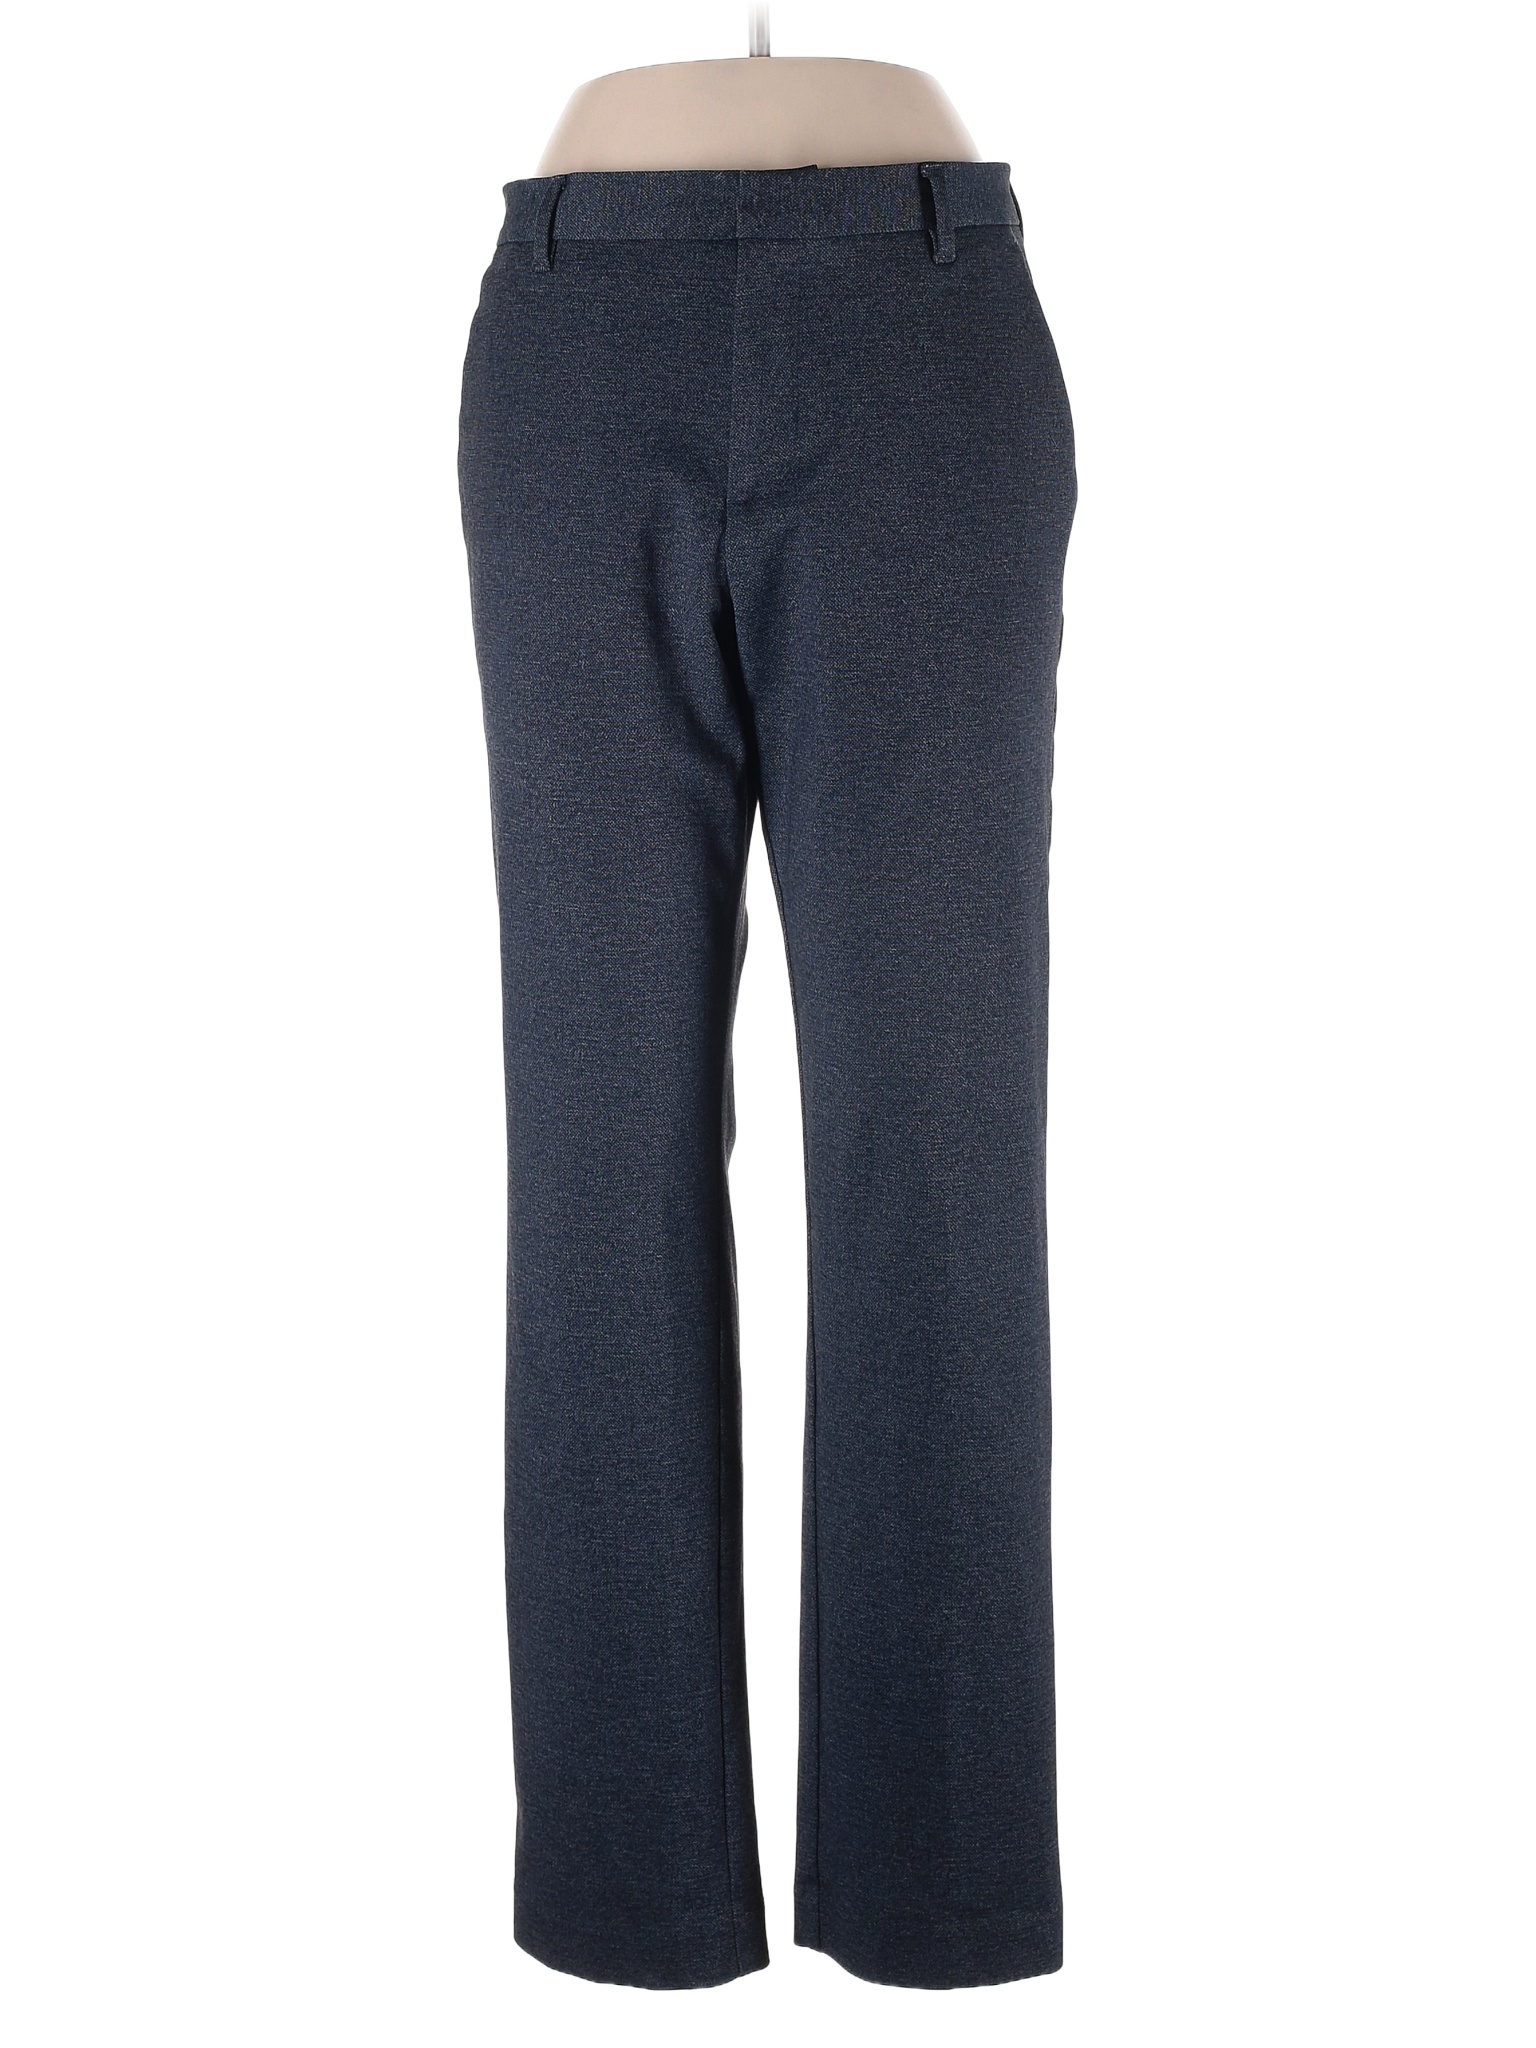 Perry Ellis Blue Dress Pants 32 Waist - 78% off | thredUP